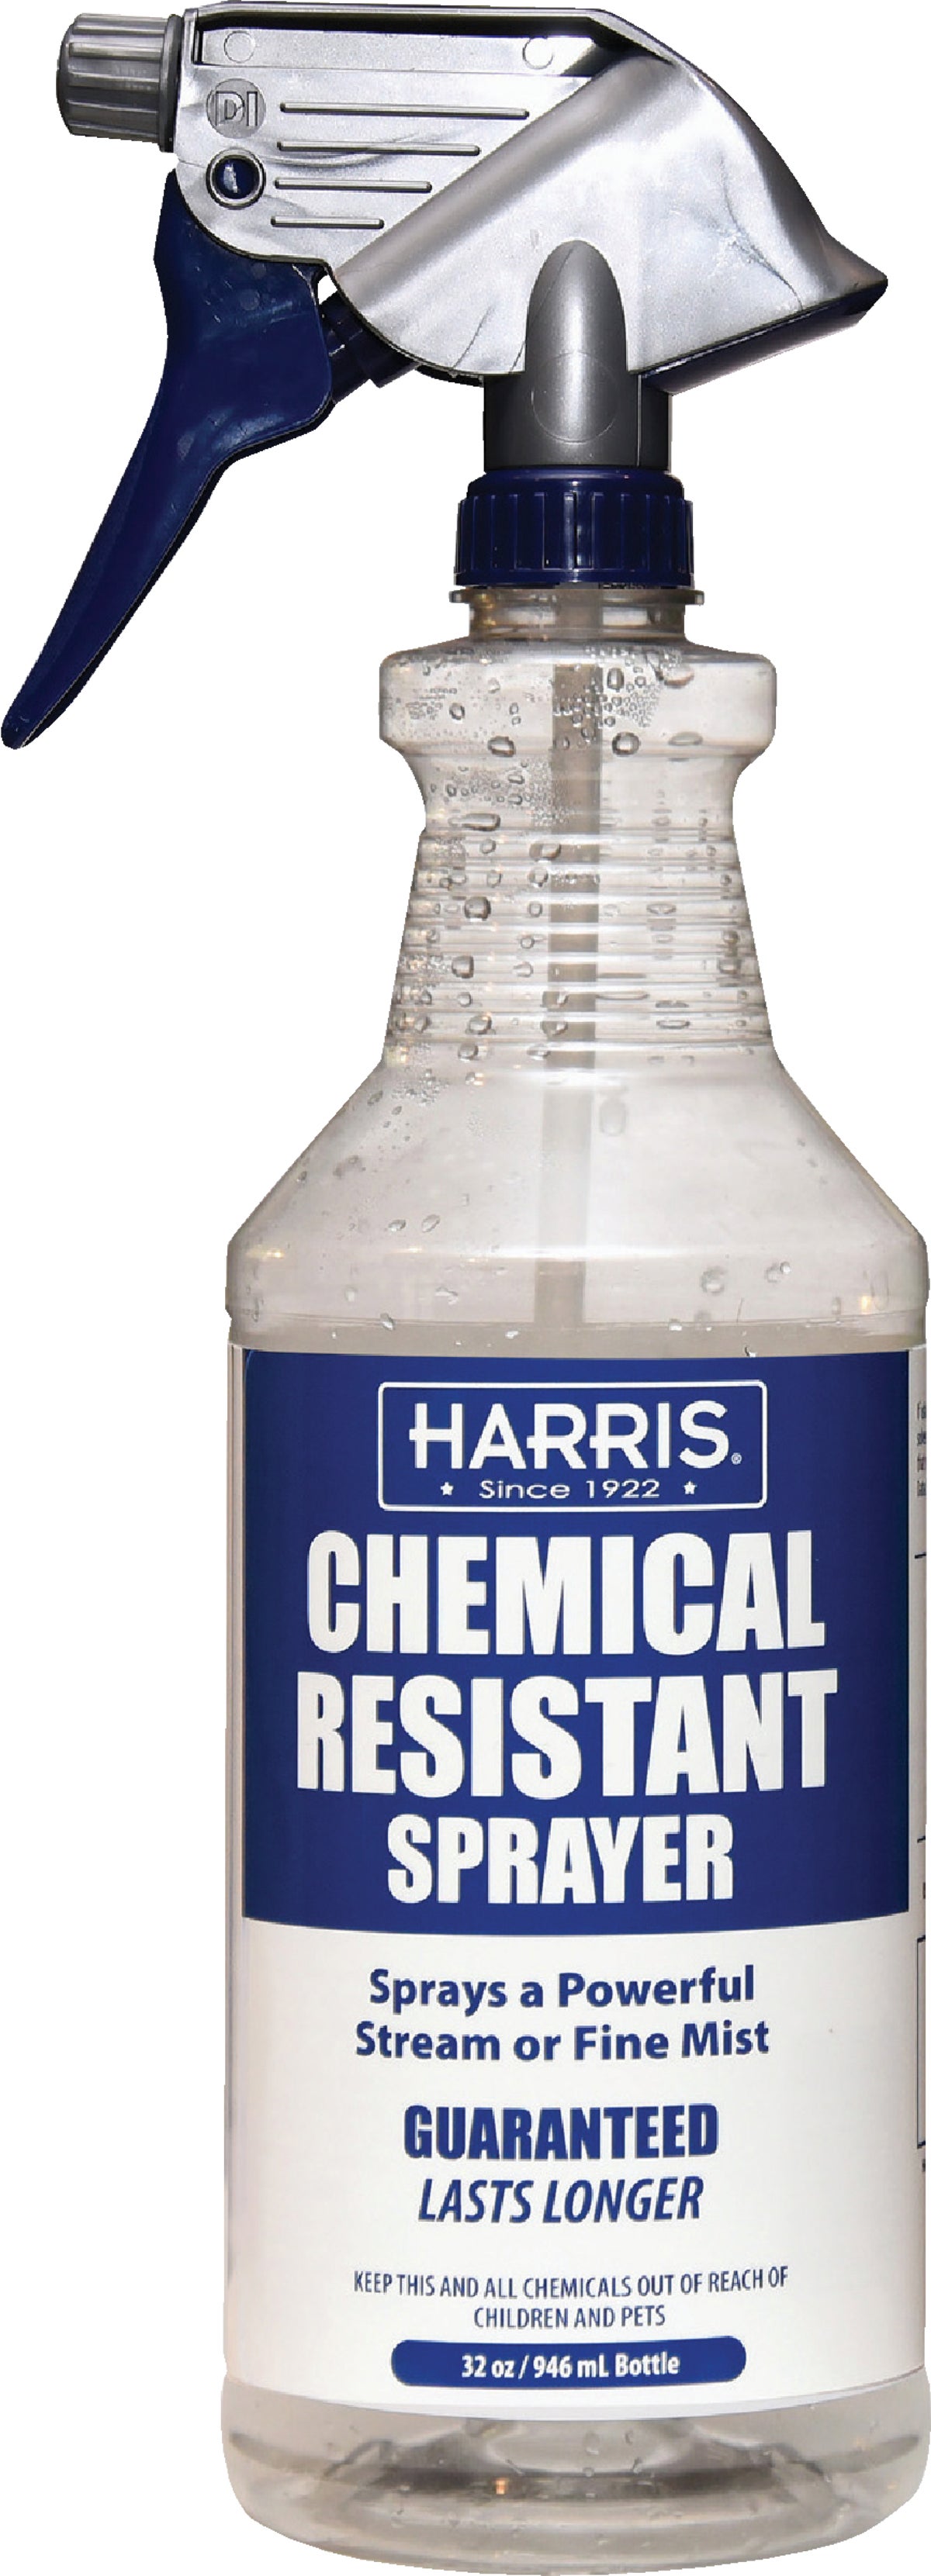 12-pack 32 Oz. Heavy Duty Chemical Resistant Spray Bottles for